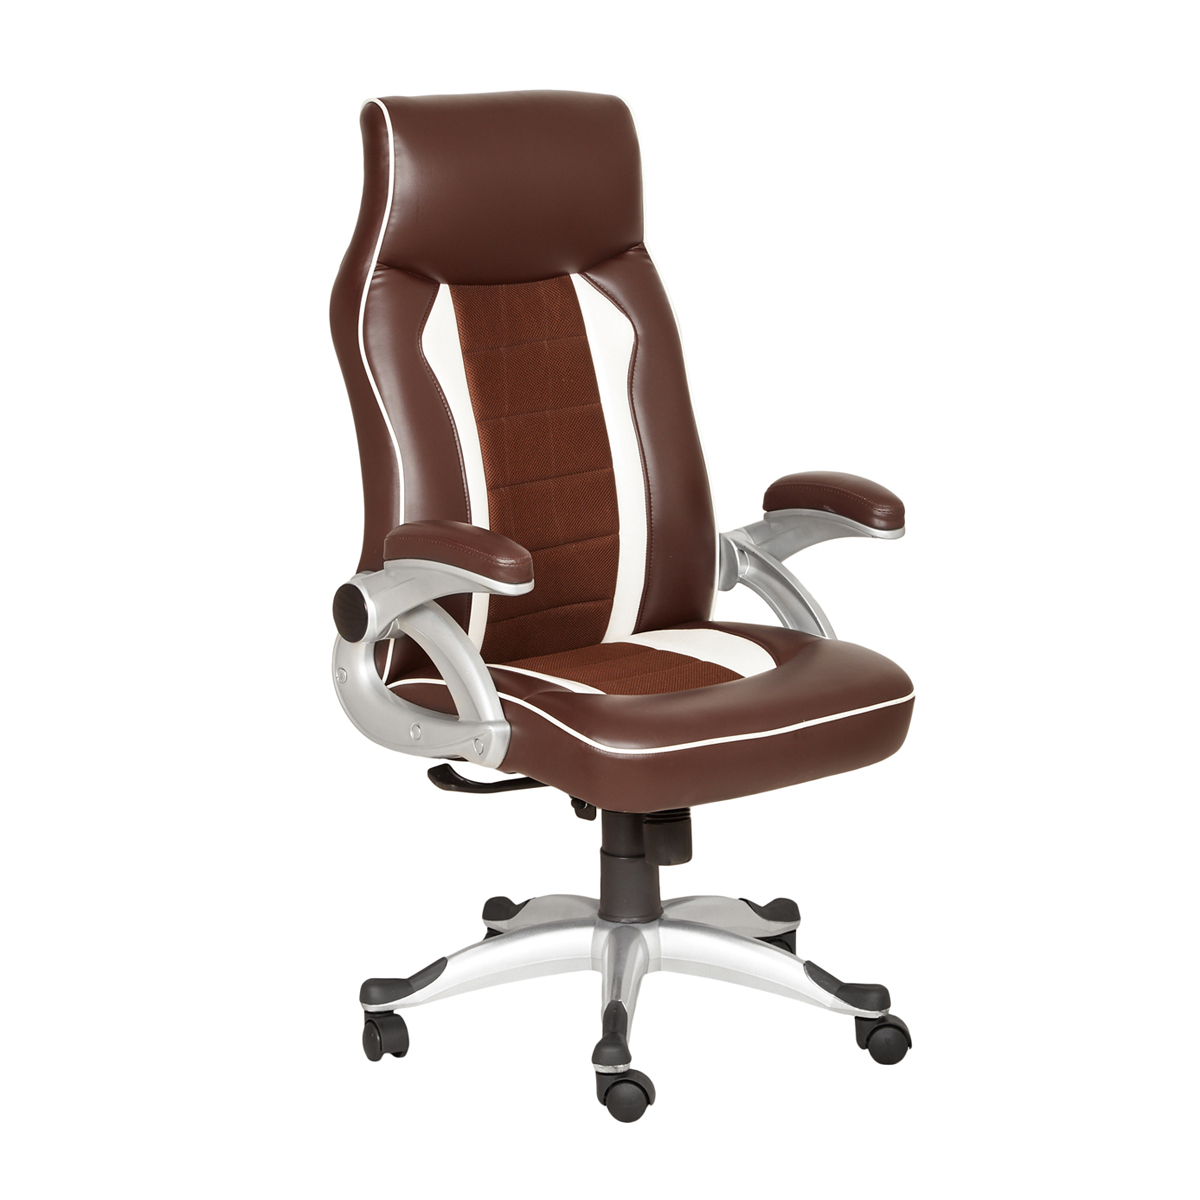 Godrej Ace Chair Price | lupon.gov.ph